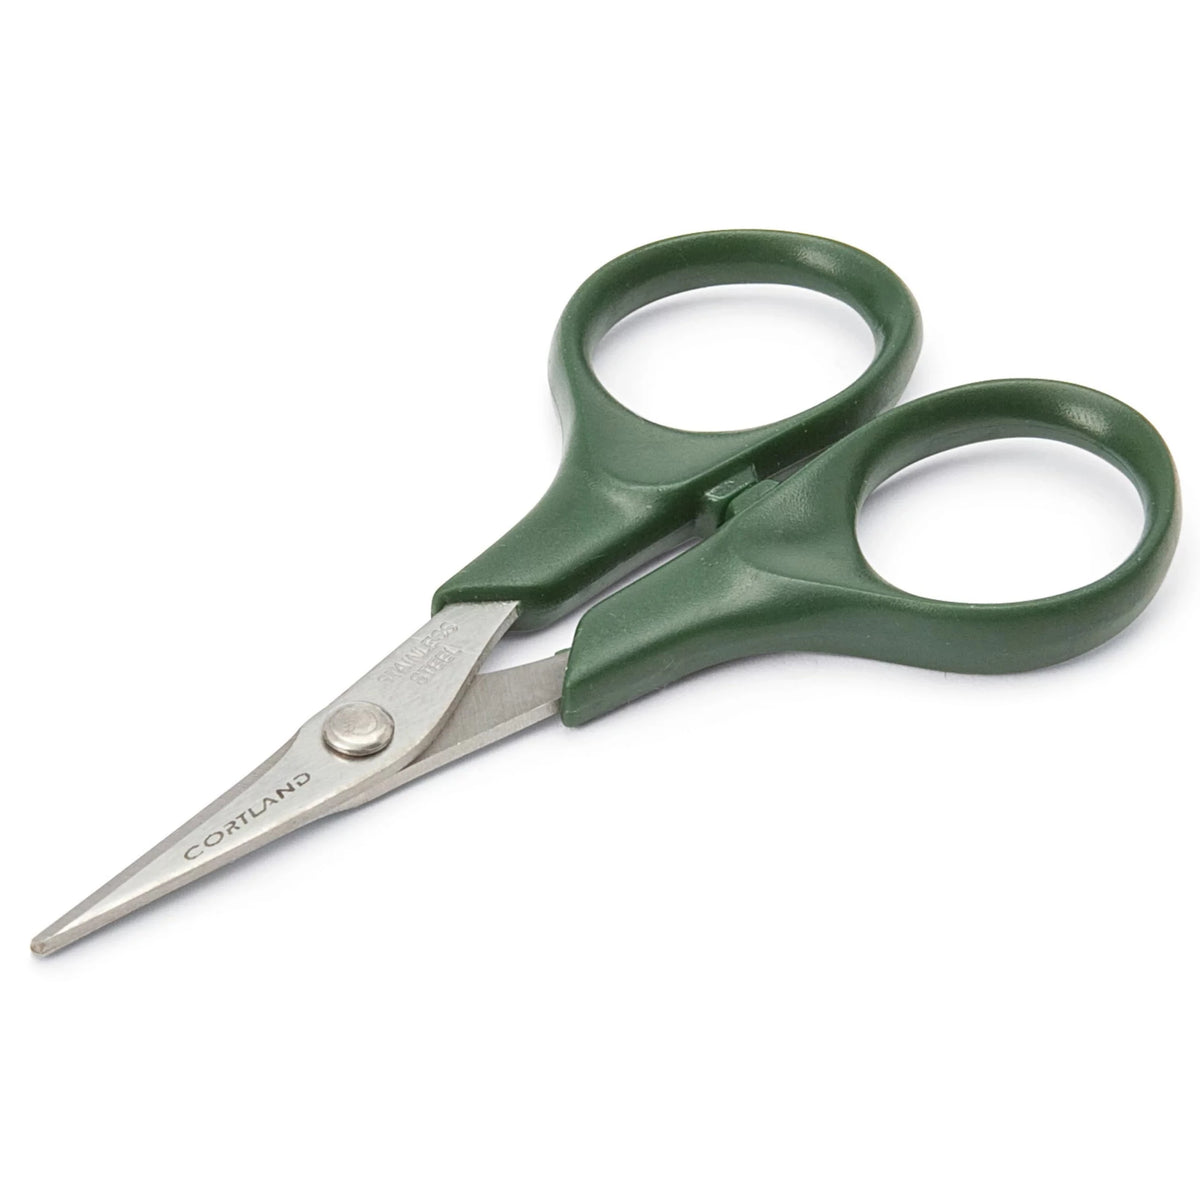 Cortland Braid Scissors